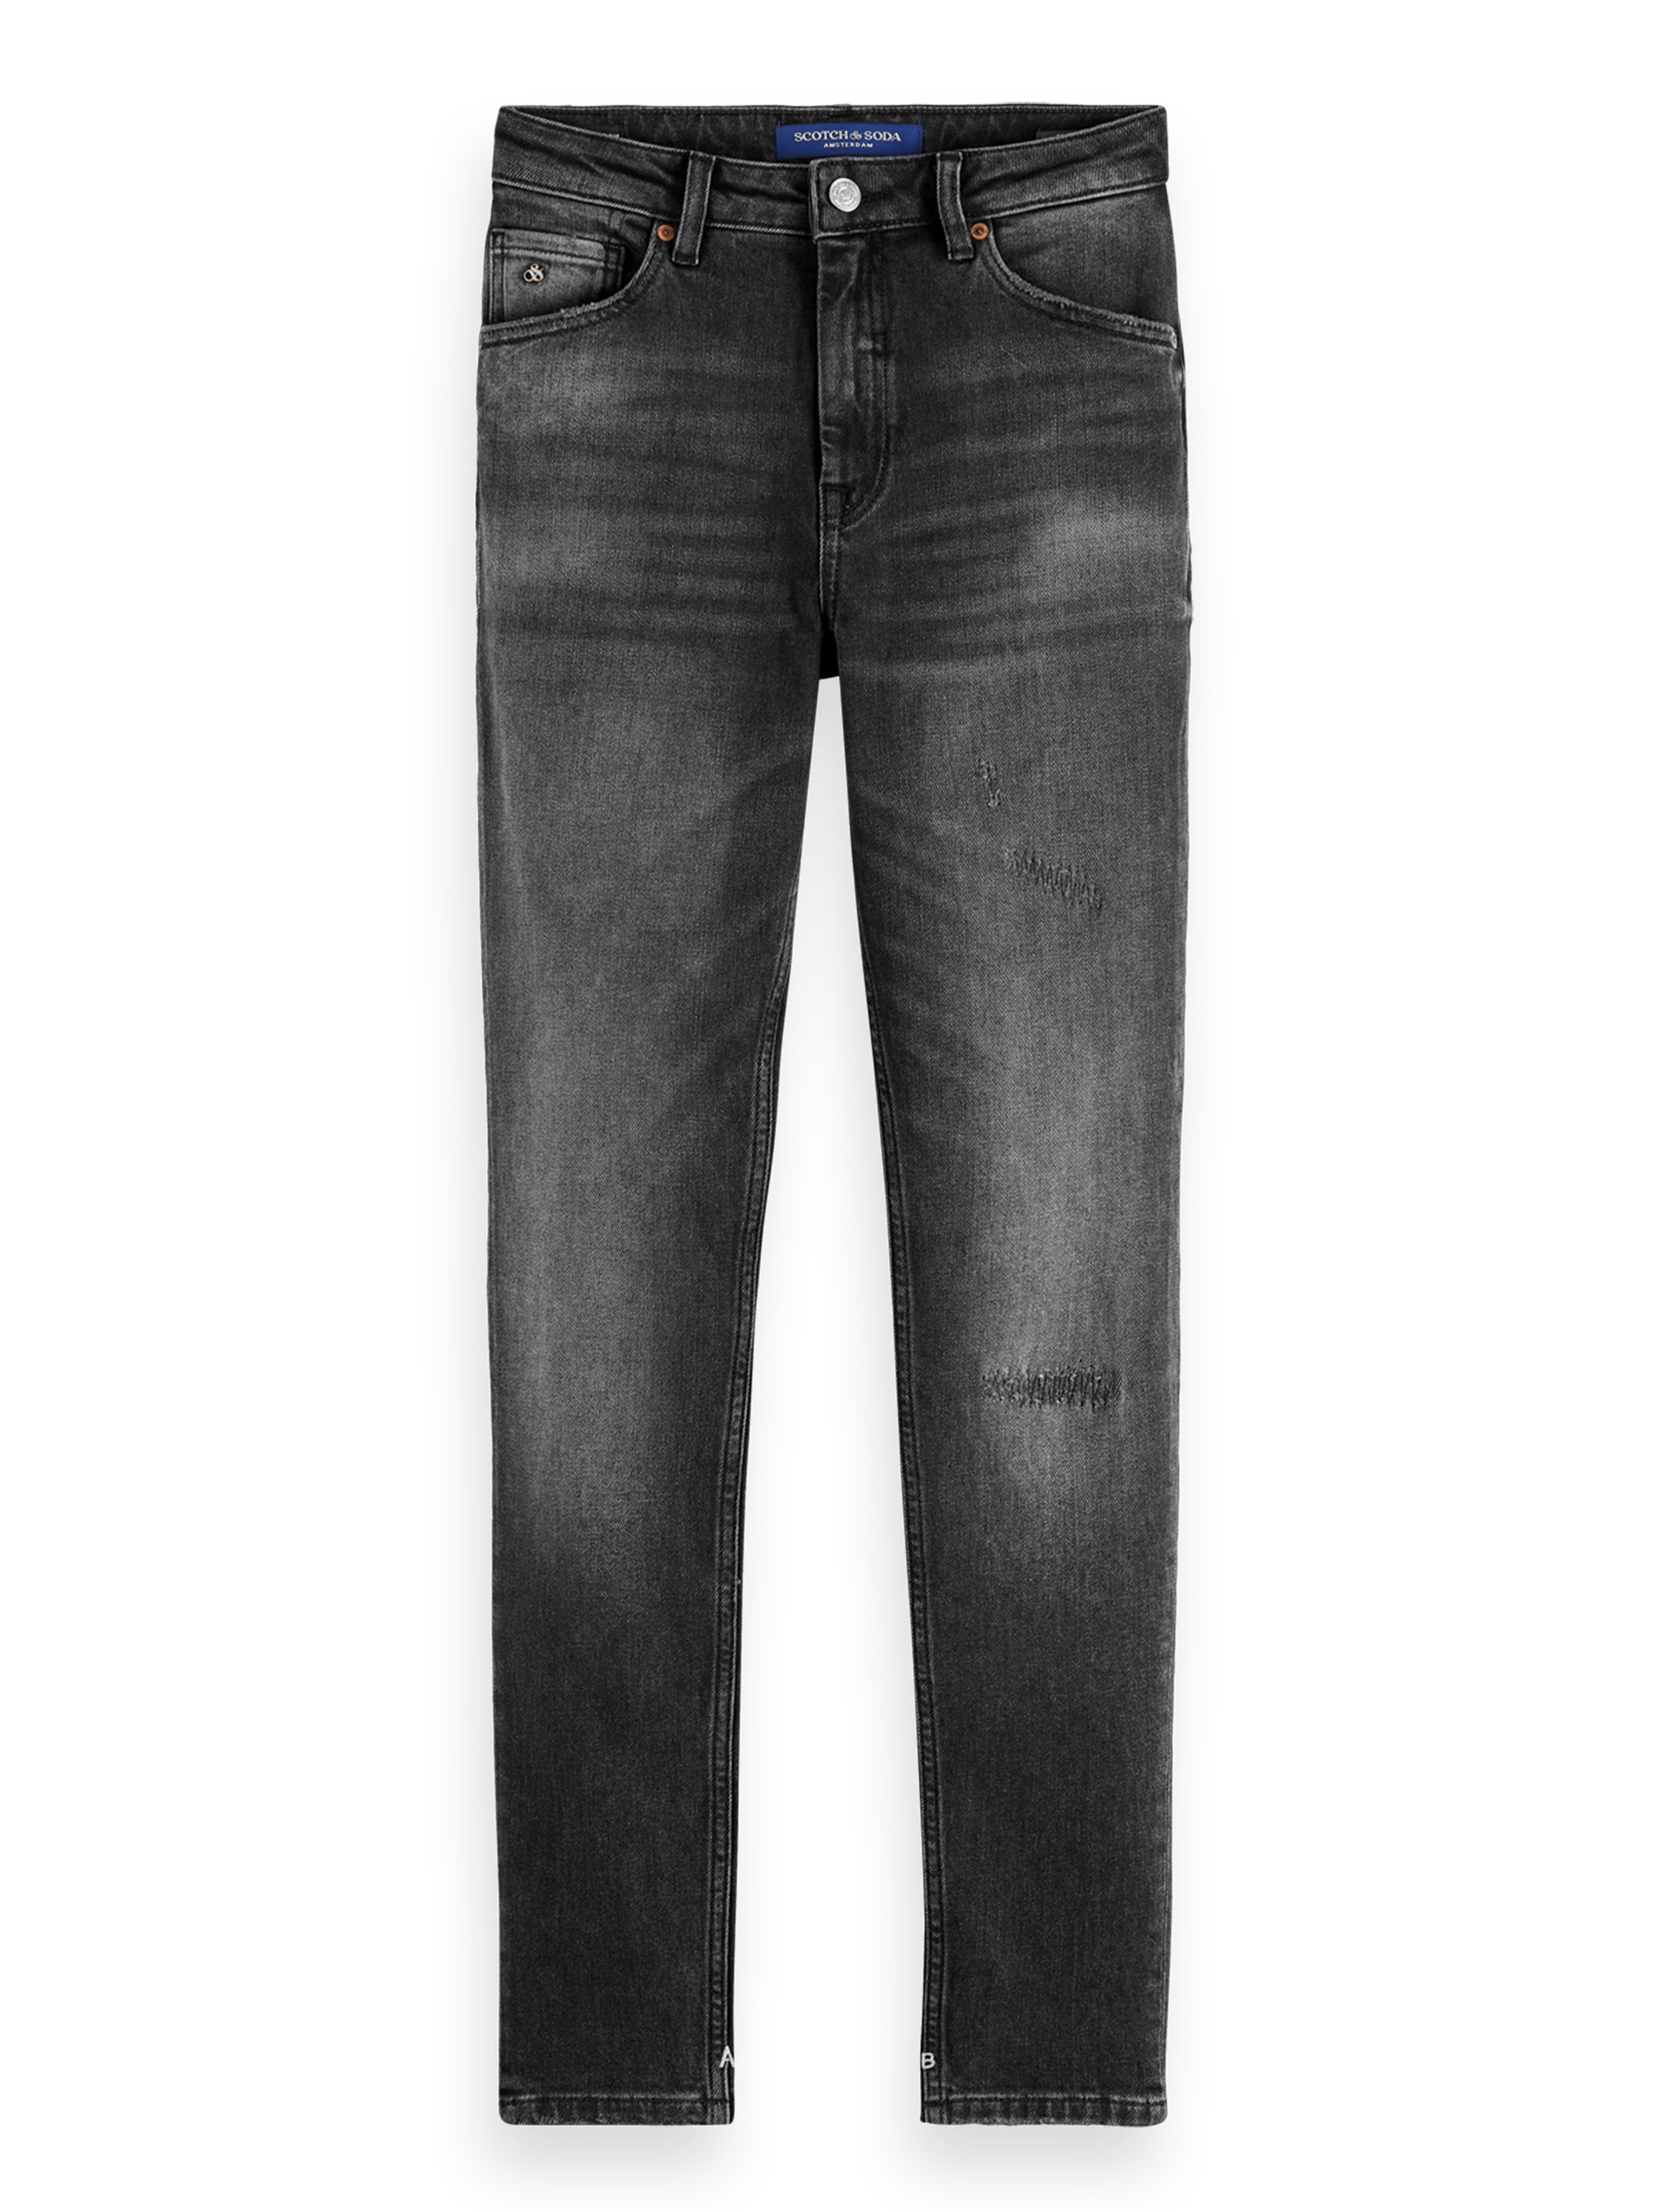 Scotch & Soda The Haut high-rise skinny jeans FNT